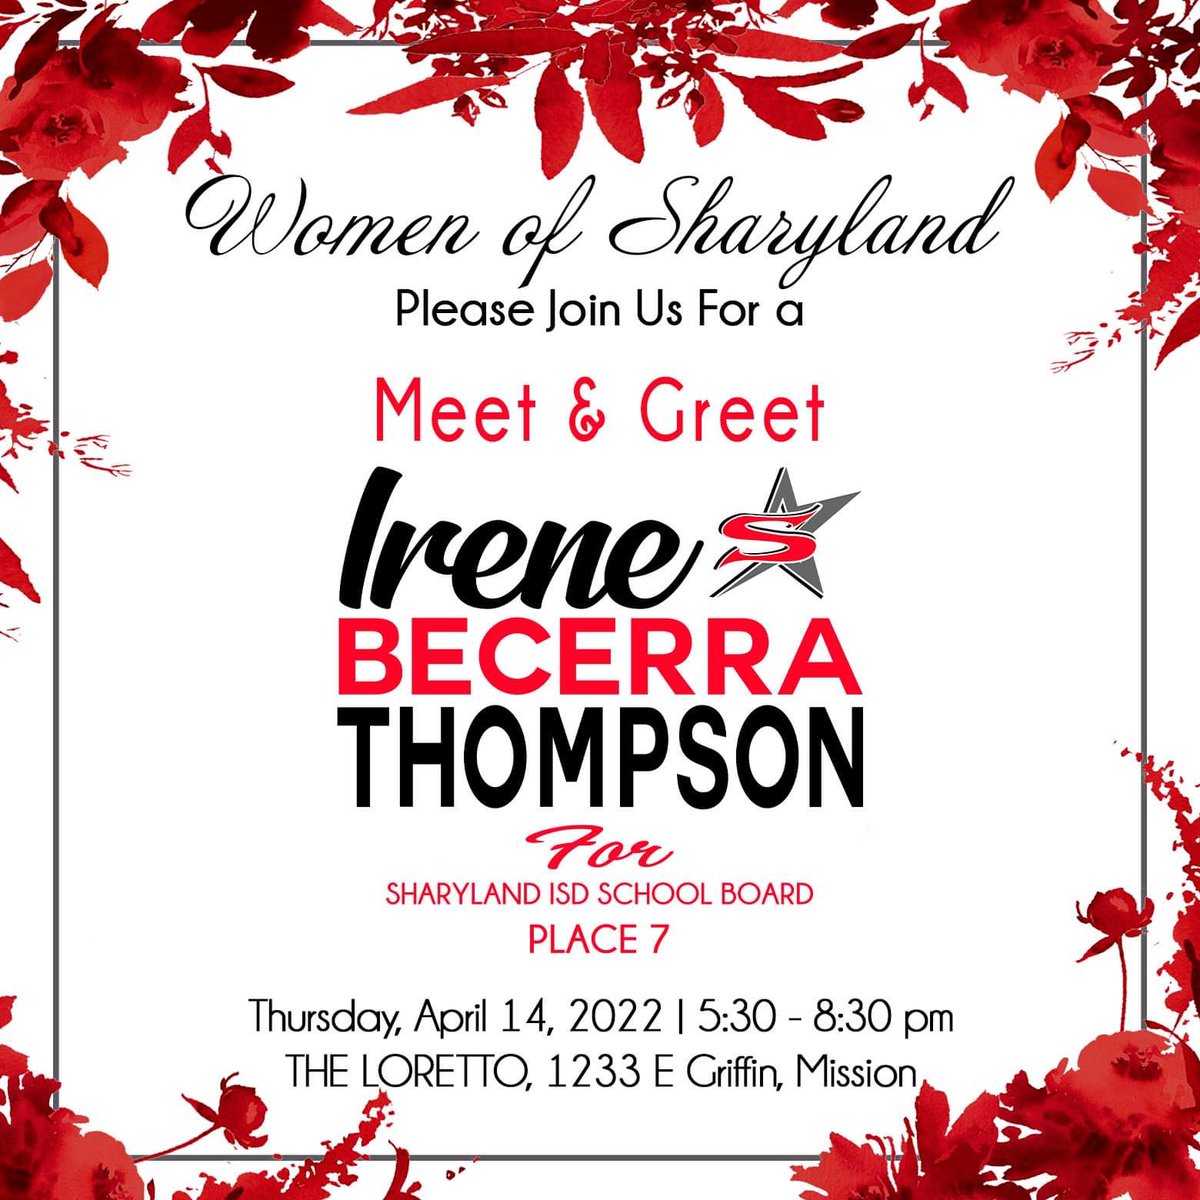 Team Irene Becerra Thompson! ❤️

#TeamIrene #SharylandISD #Place7 #servantleader #uniquelyqualified